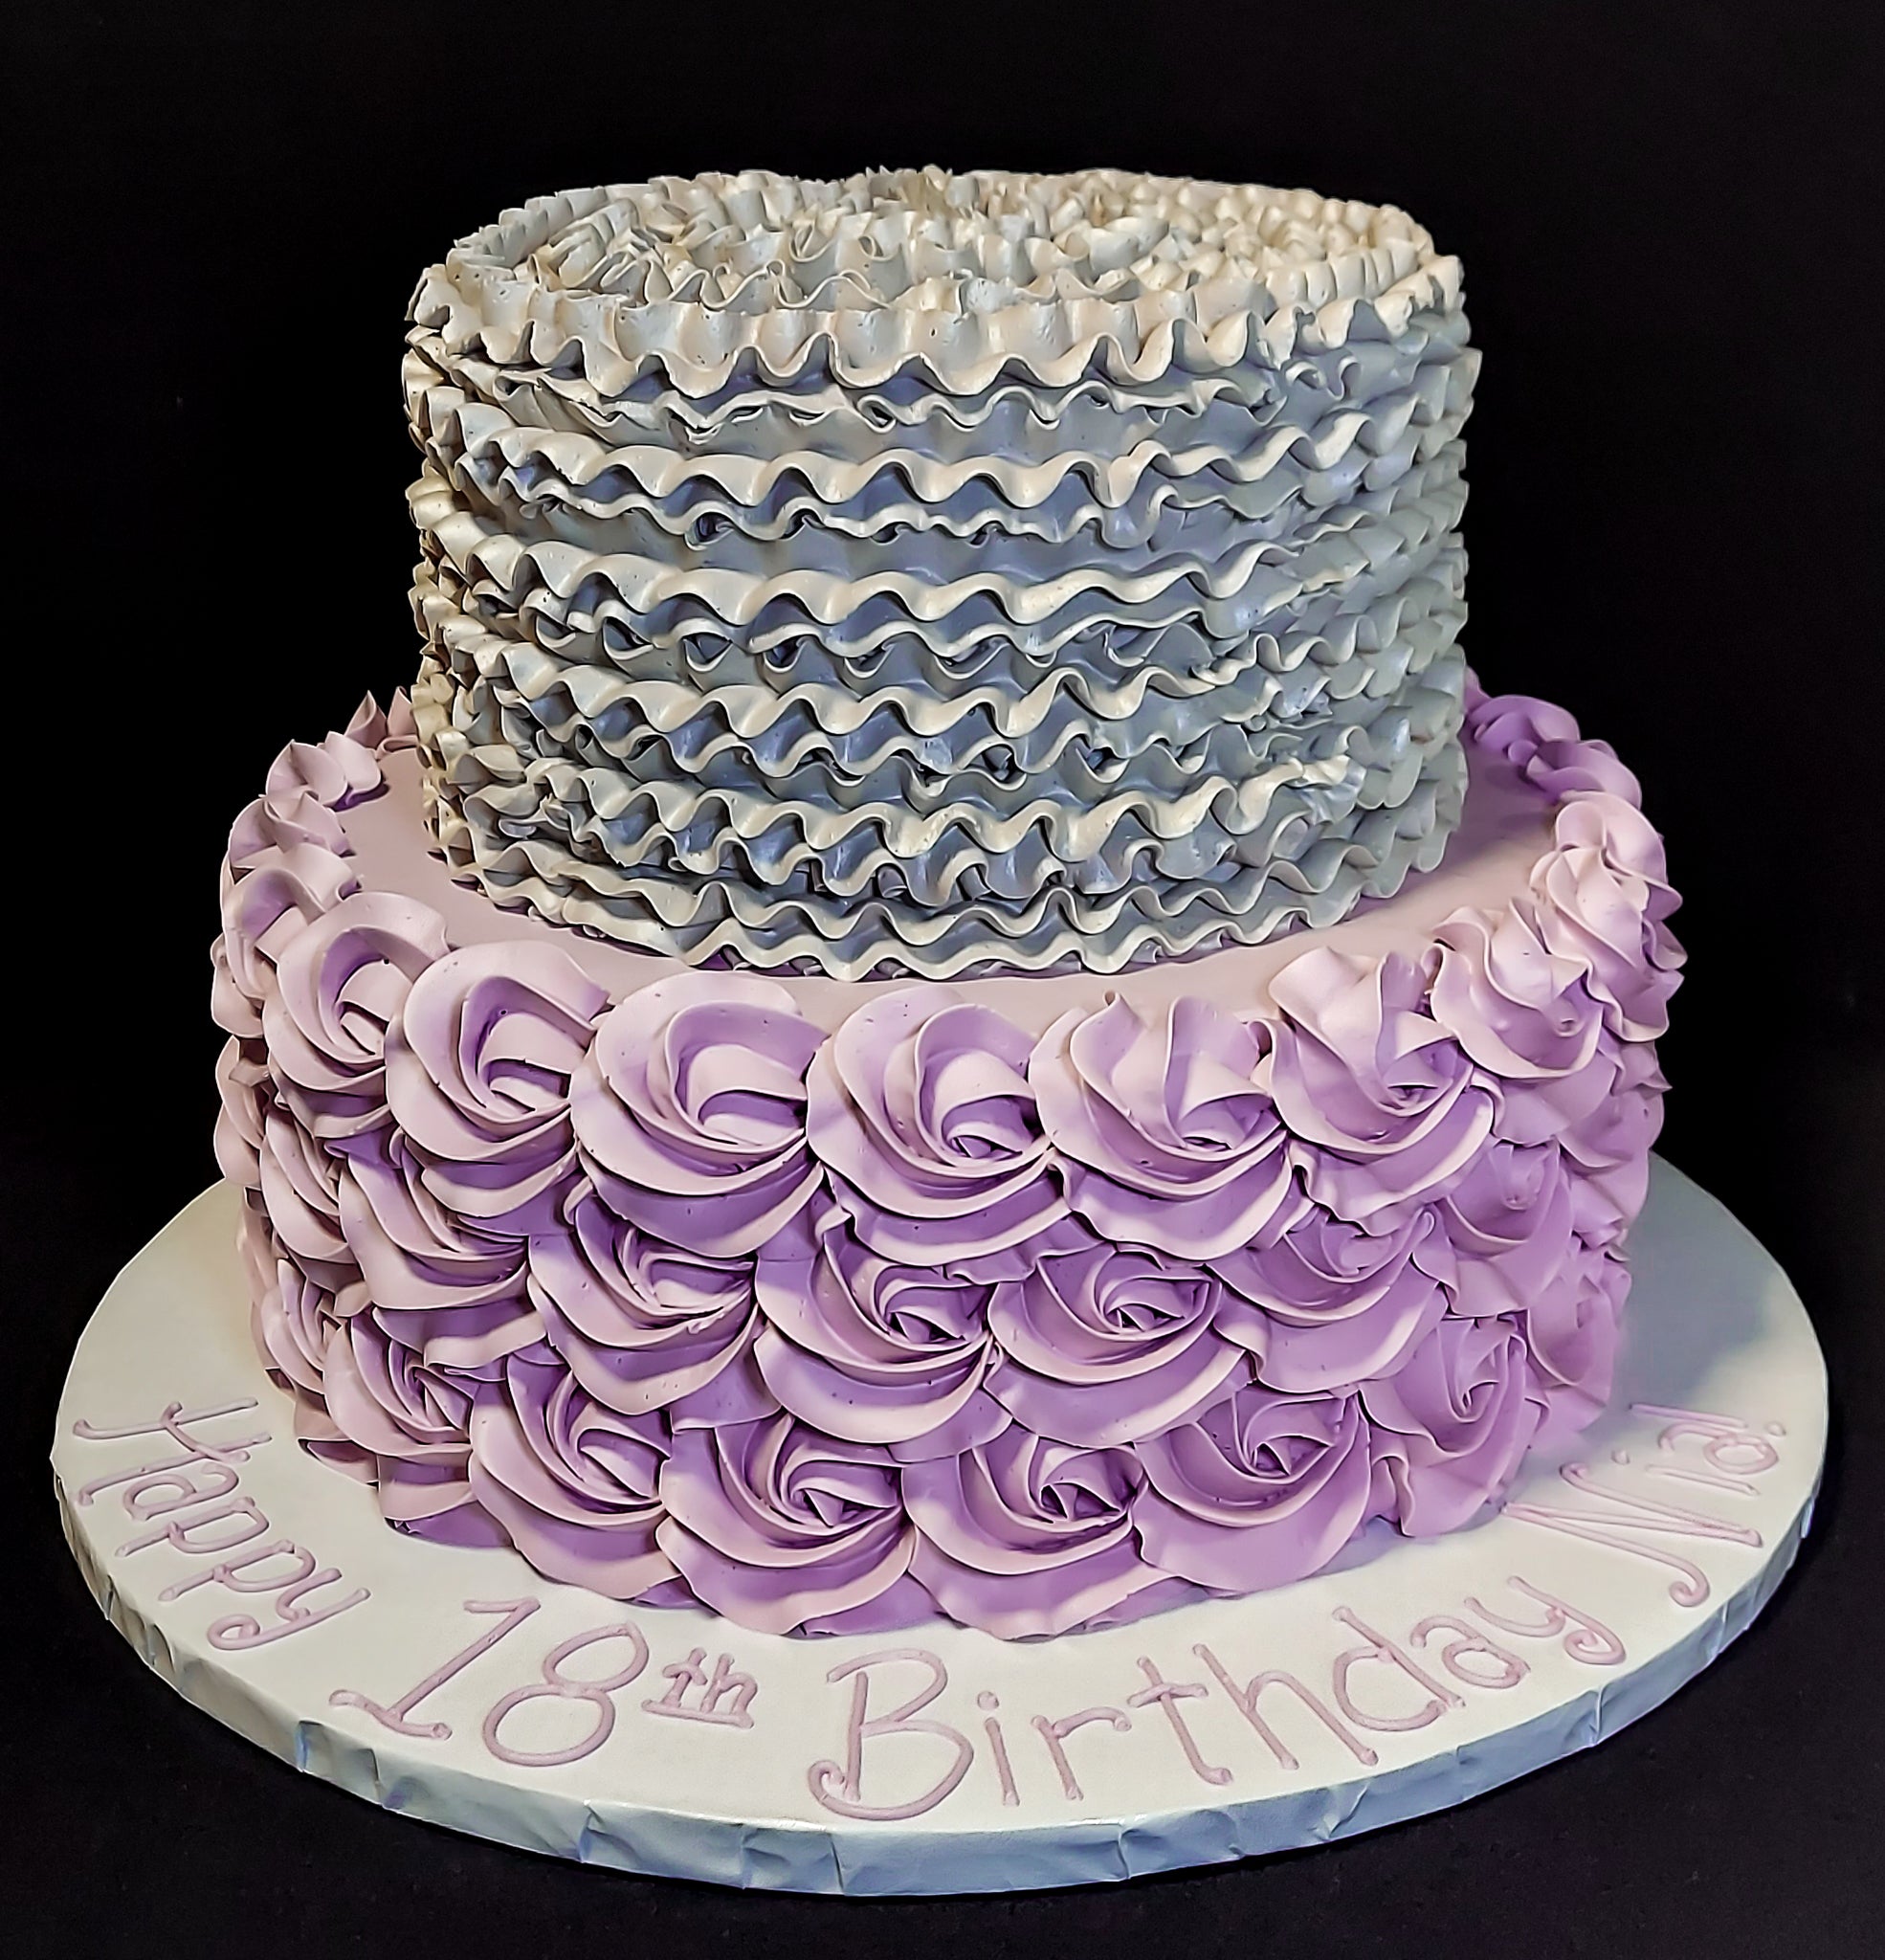 Rosette Three Tier Celebration Tier Cake - 6